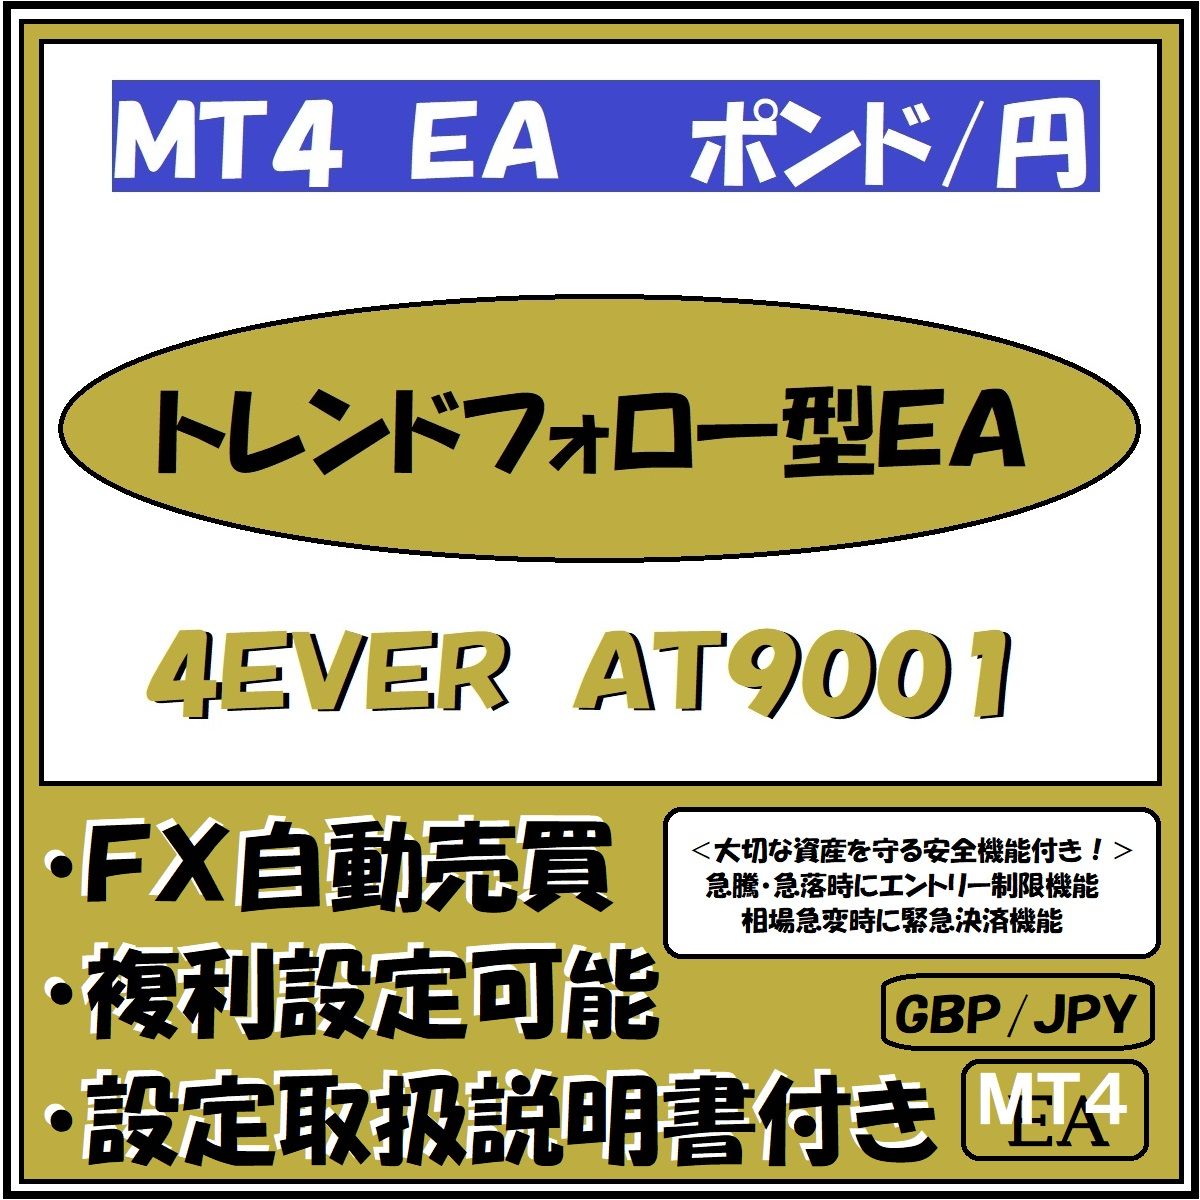 GBP-JPY　4EVER　AT9001（ポンド円　トレンドフォロー型安全運用機能付きＥＡ） Auto Trading